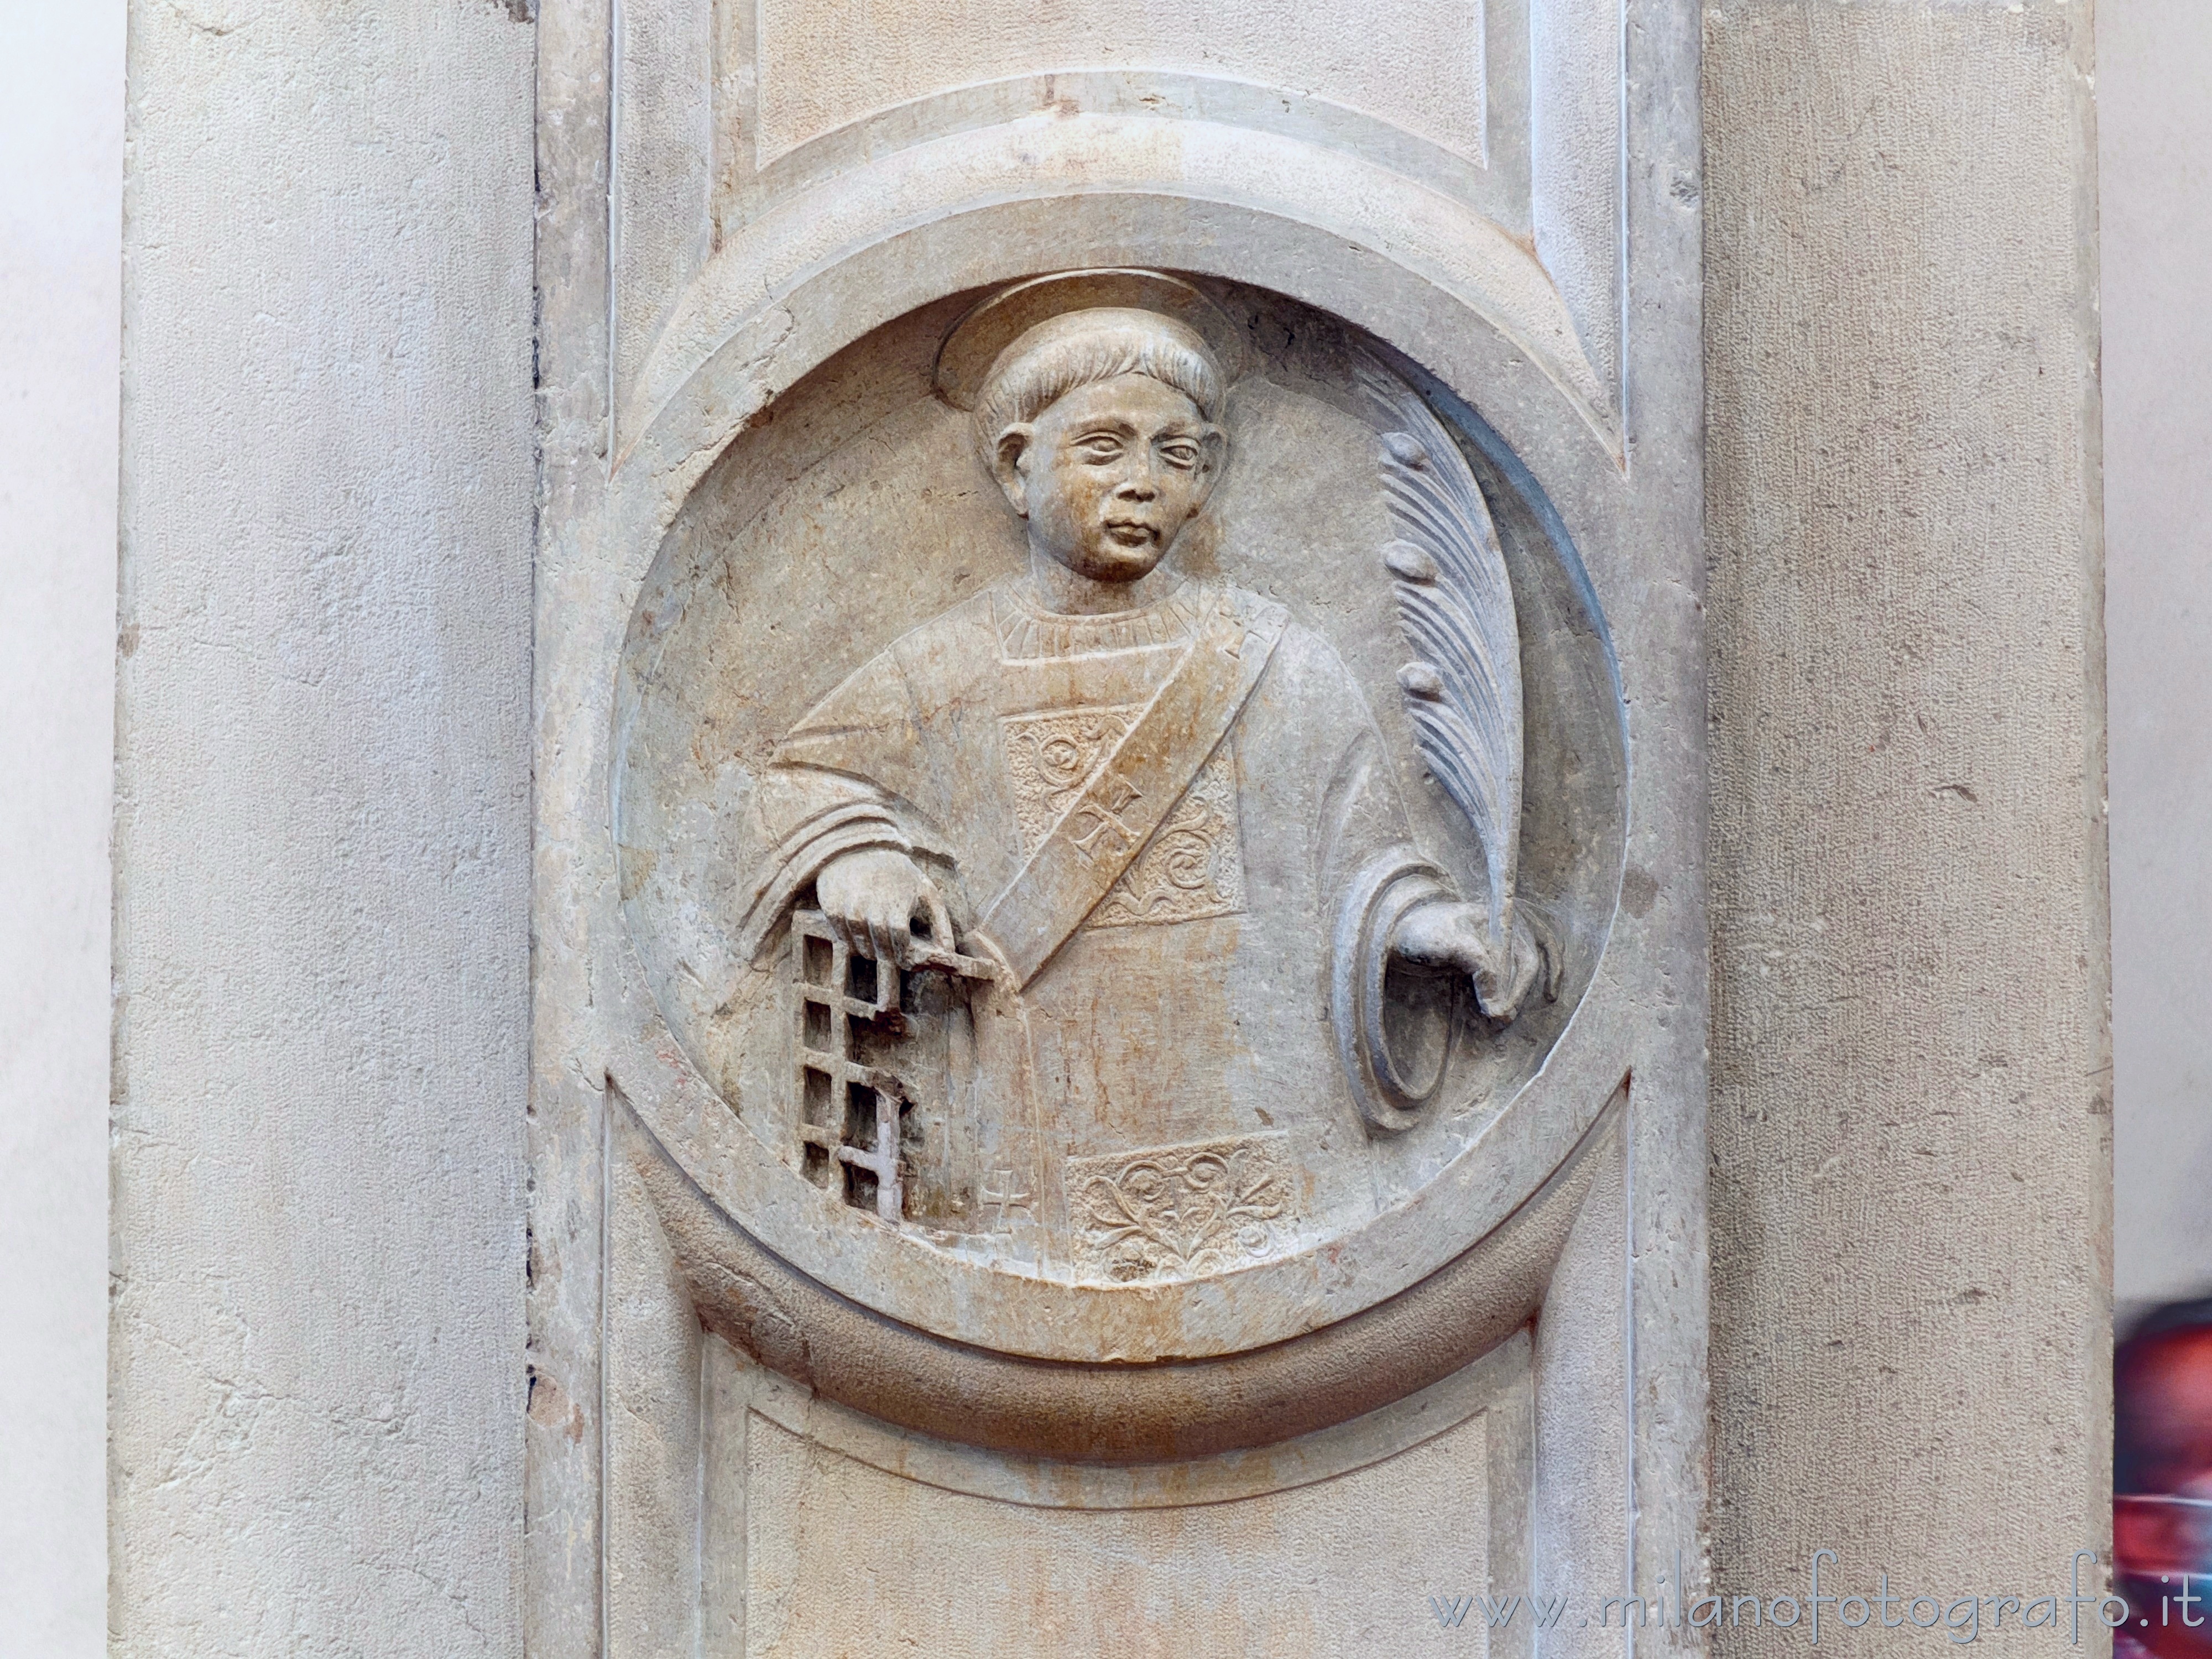 Brugherio (Monza e Brianza, Italy): Medallion depicting Saint Lawrence in the Church of San Lucio in Moncucco - Brugherio (Monza e Brianza, Italy)